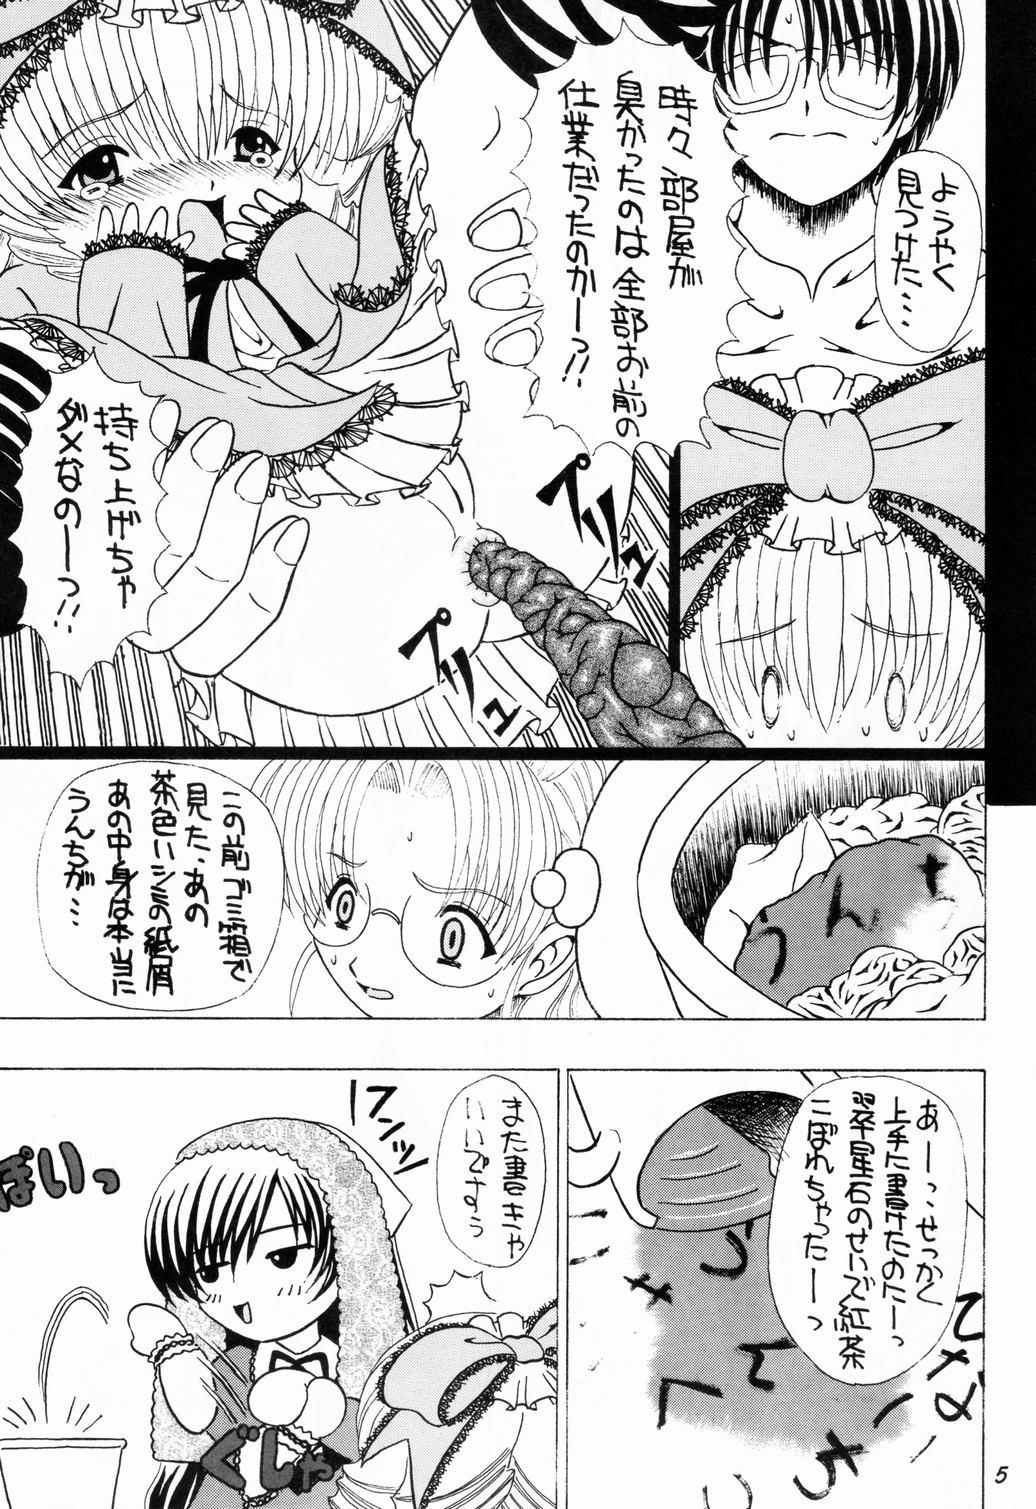 Sofa Dengeki Shiri Magazine 8 - Rozen maiden Imvu - Page 4